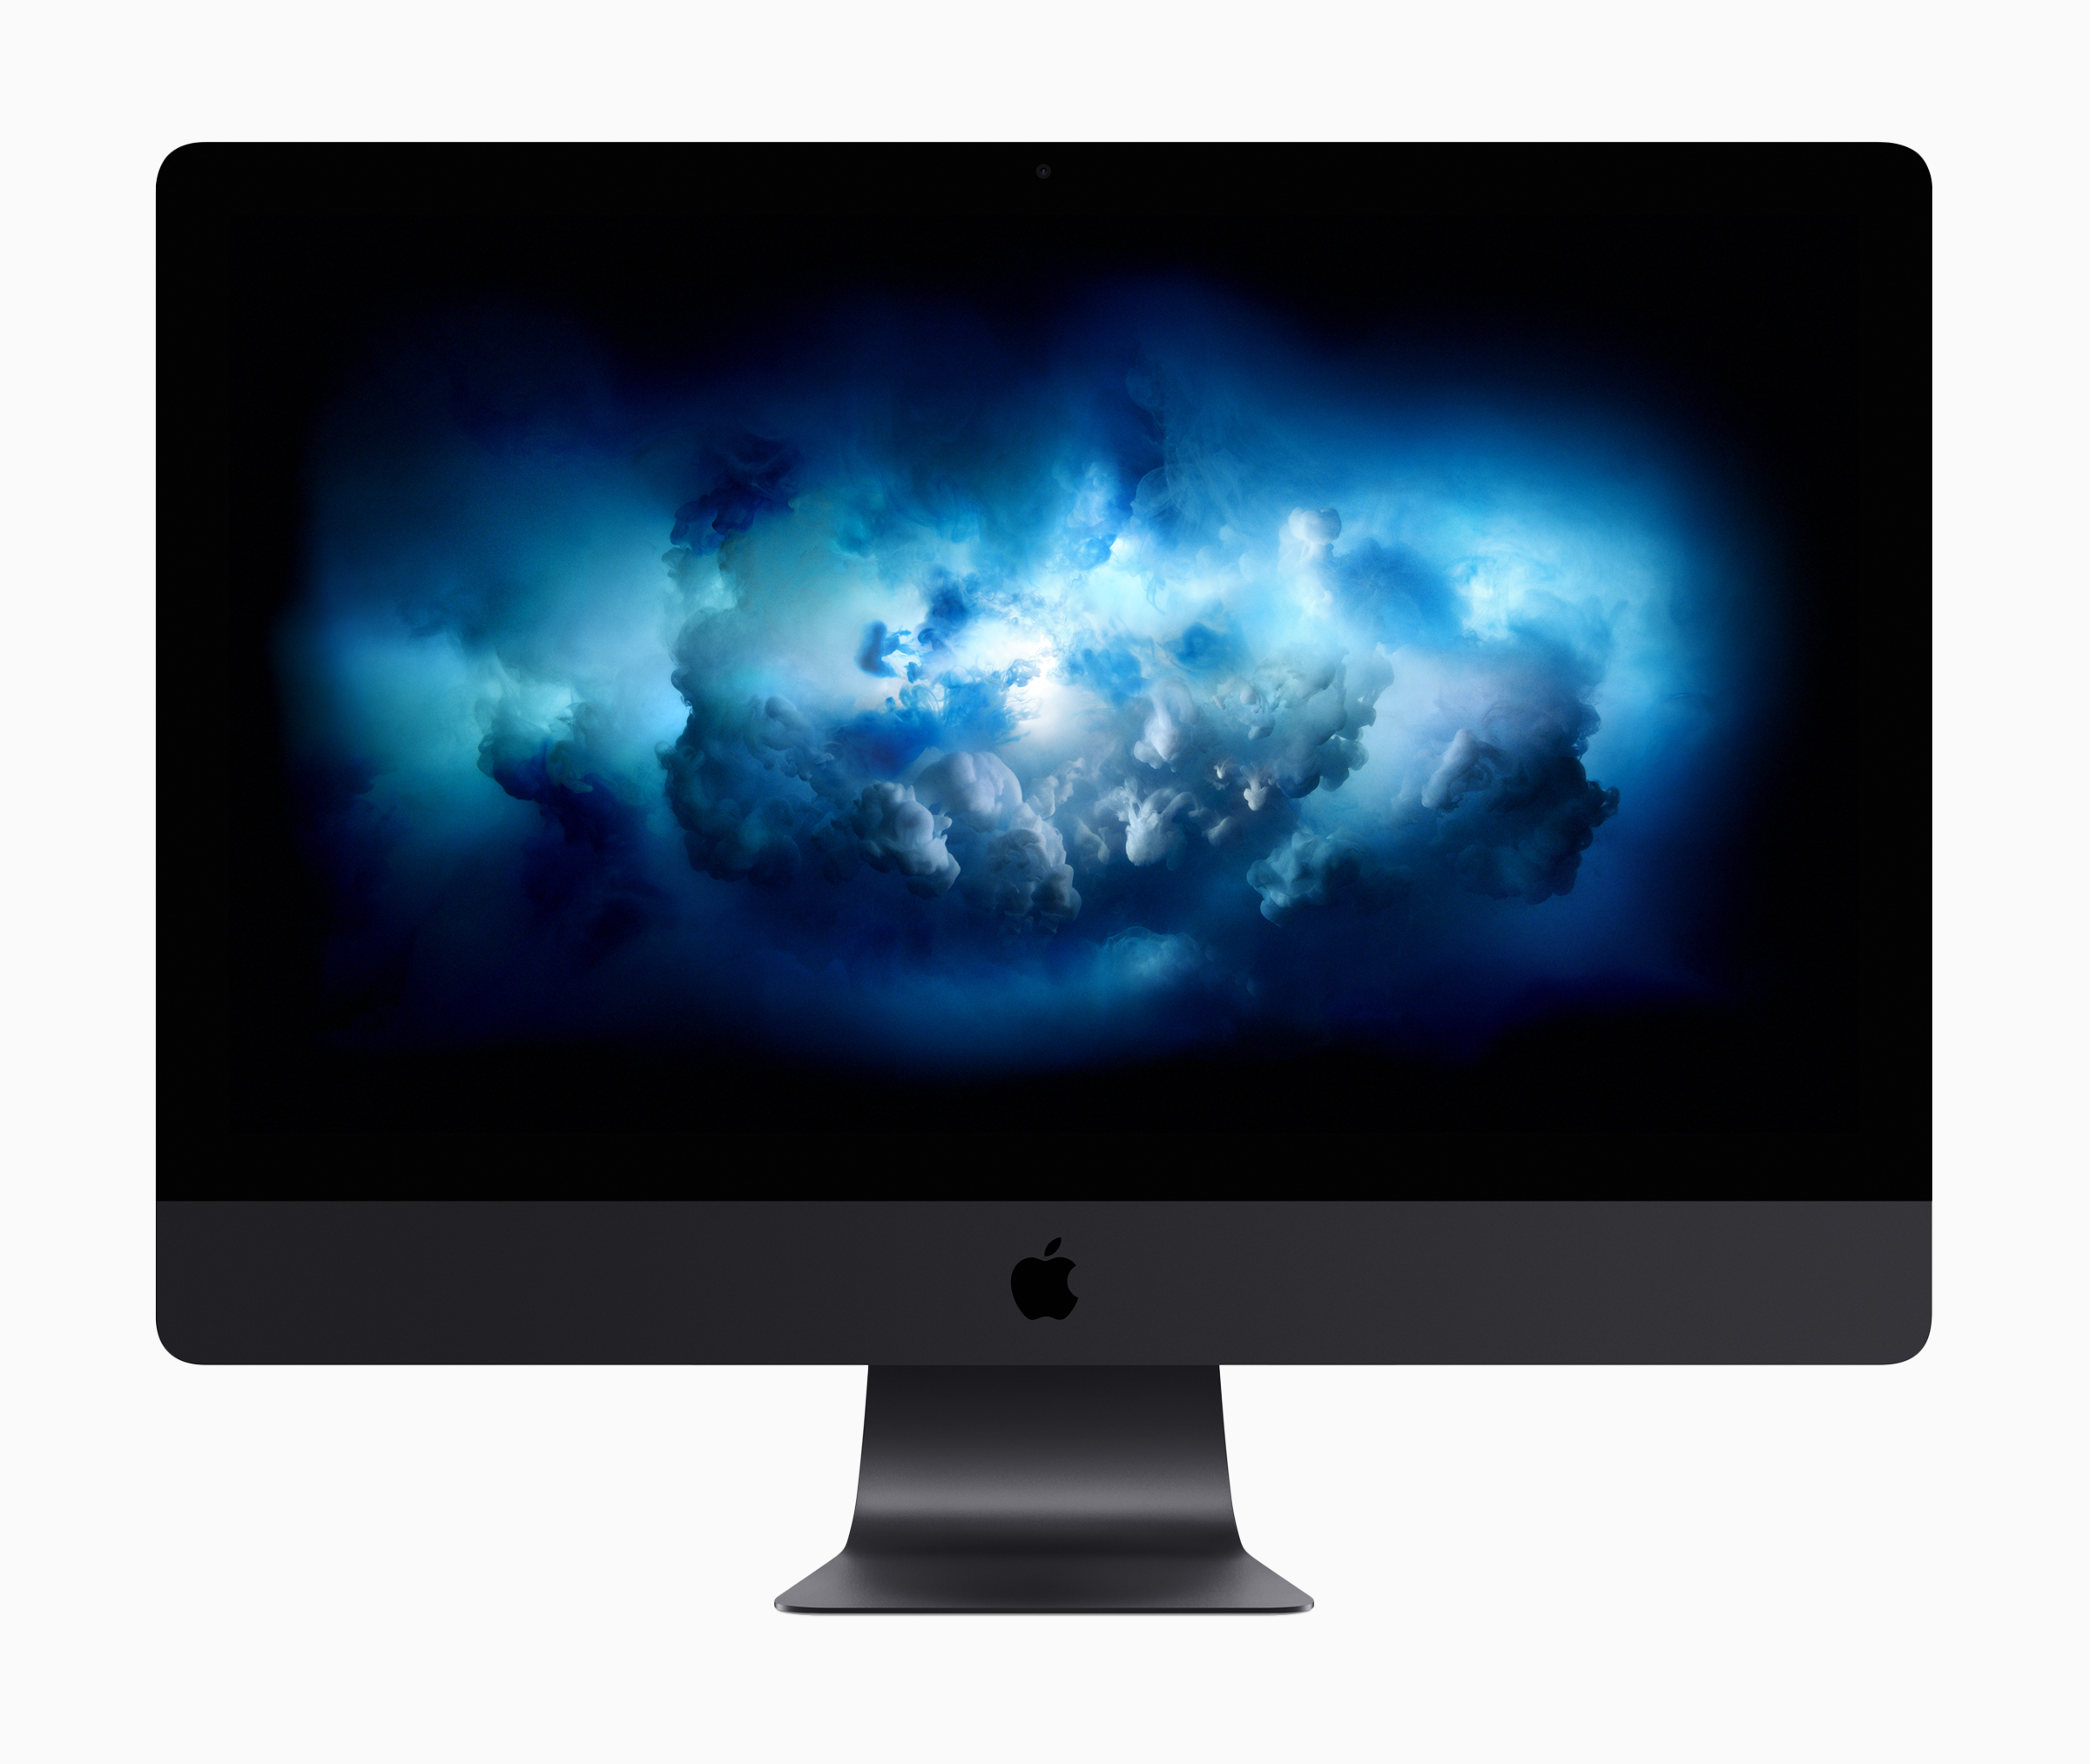 iMac Proが販売終了 Apple Online Storeから削除 - AppleFan Times